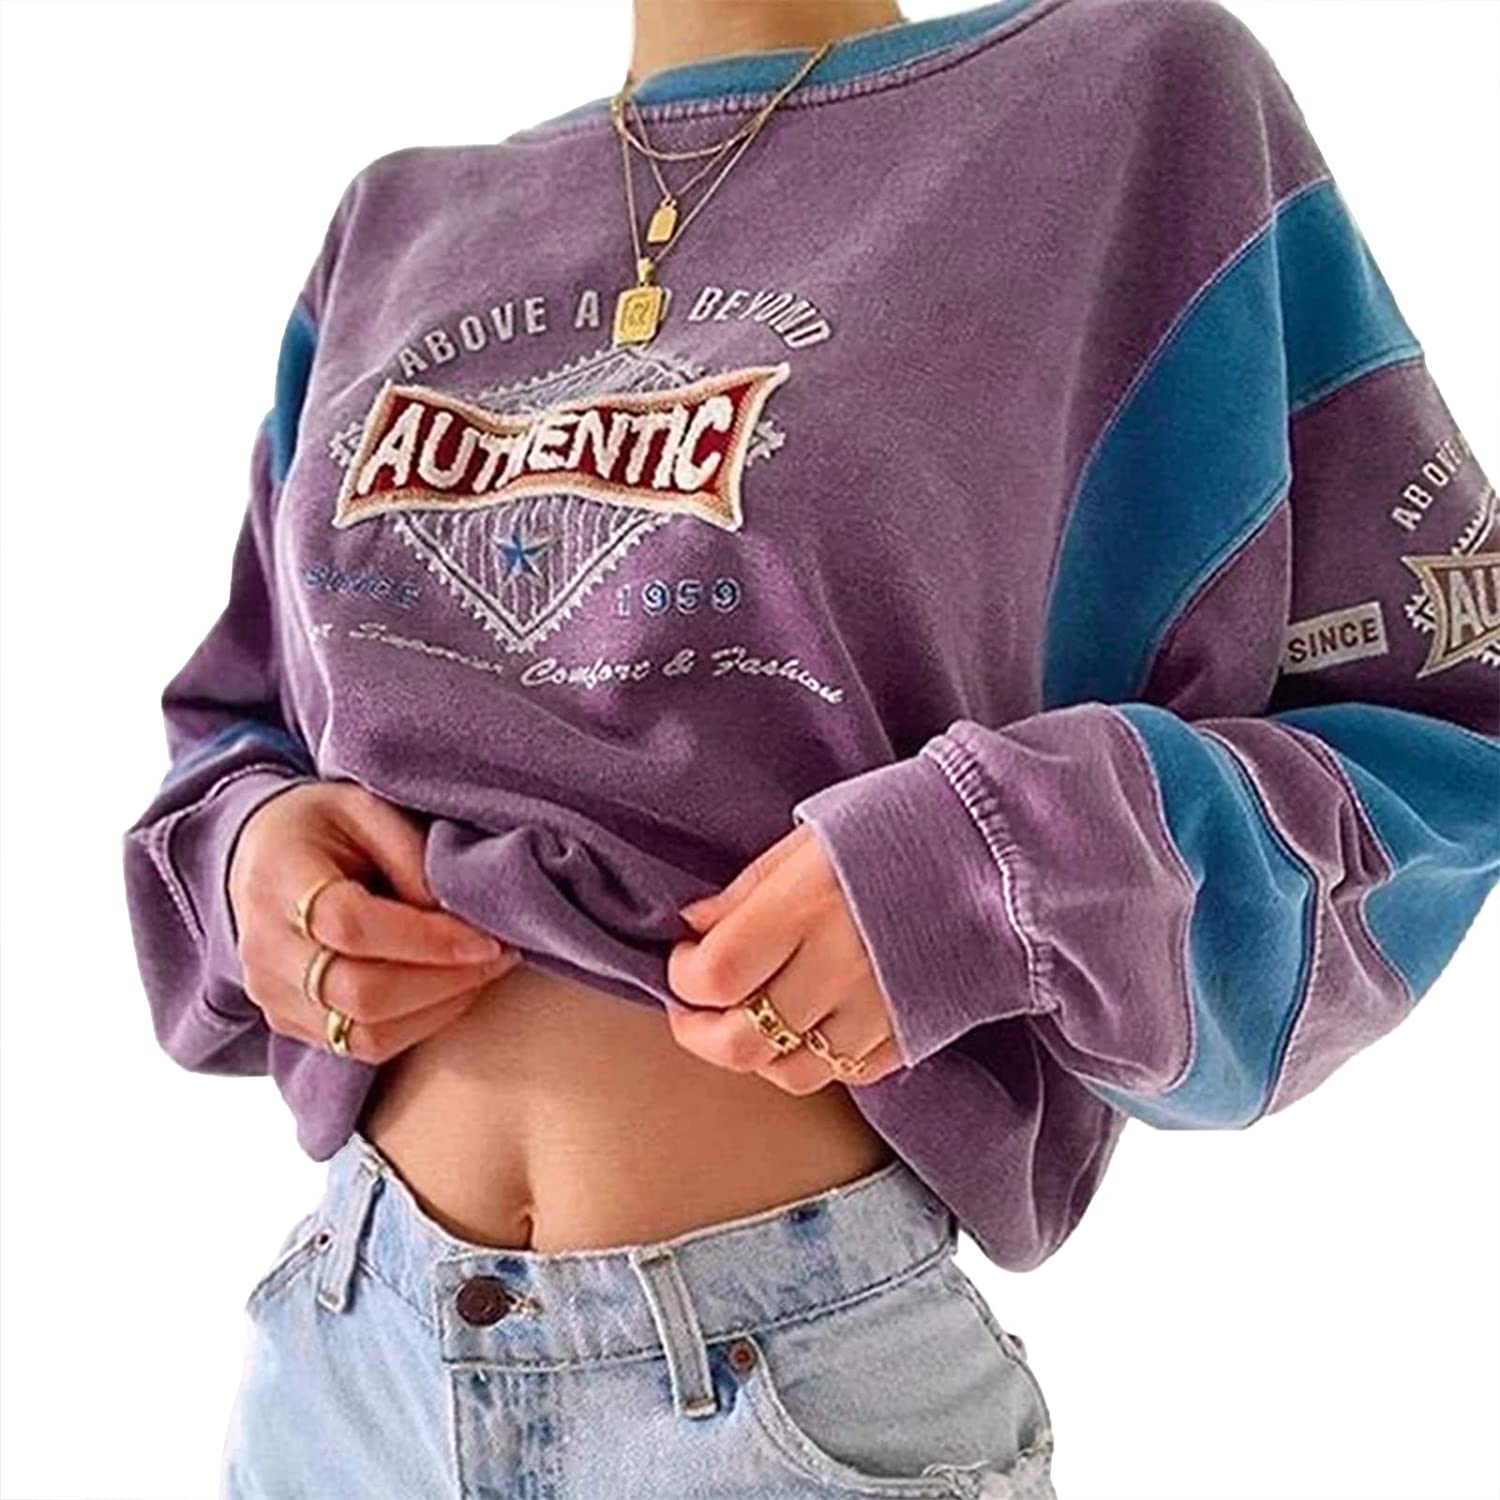 Vintage Alaska Letter Womens Oversized Sweatshirt With POLO Collar